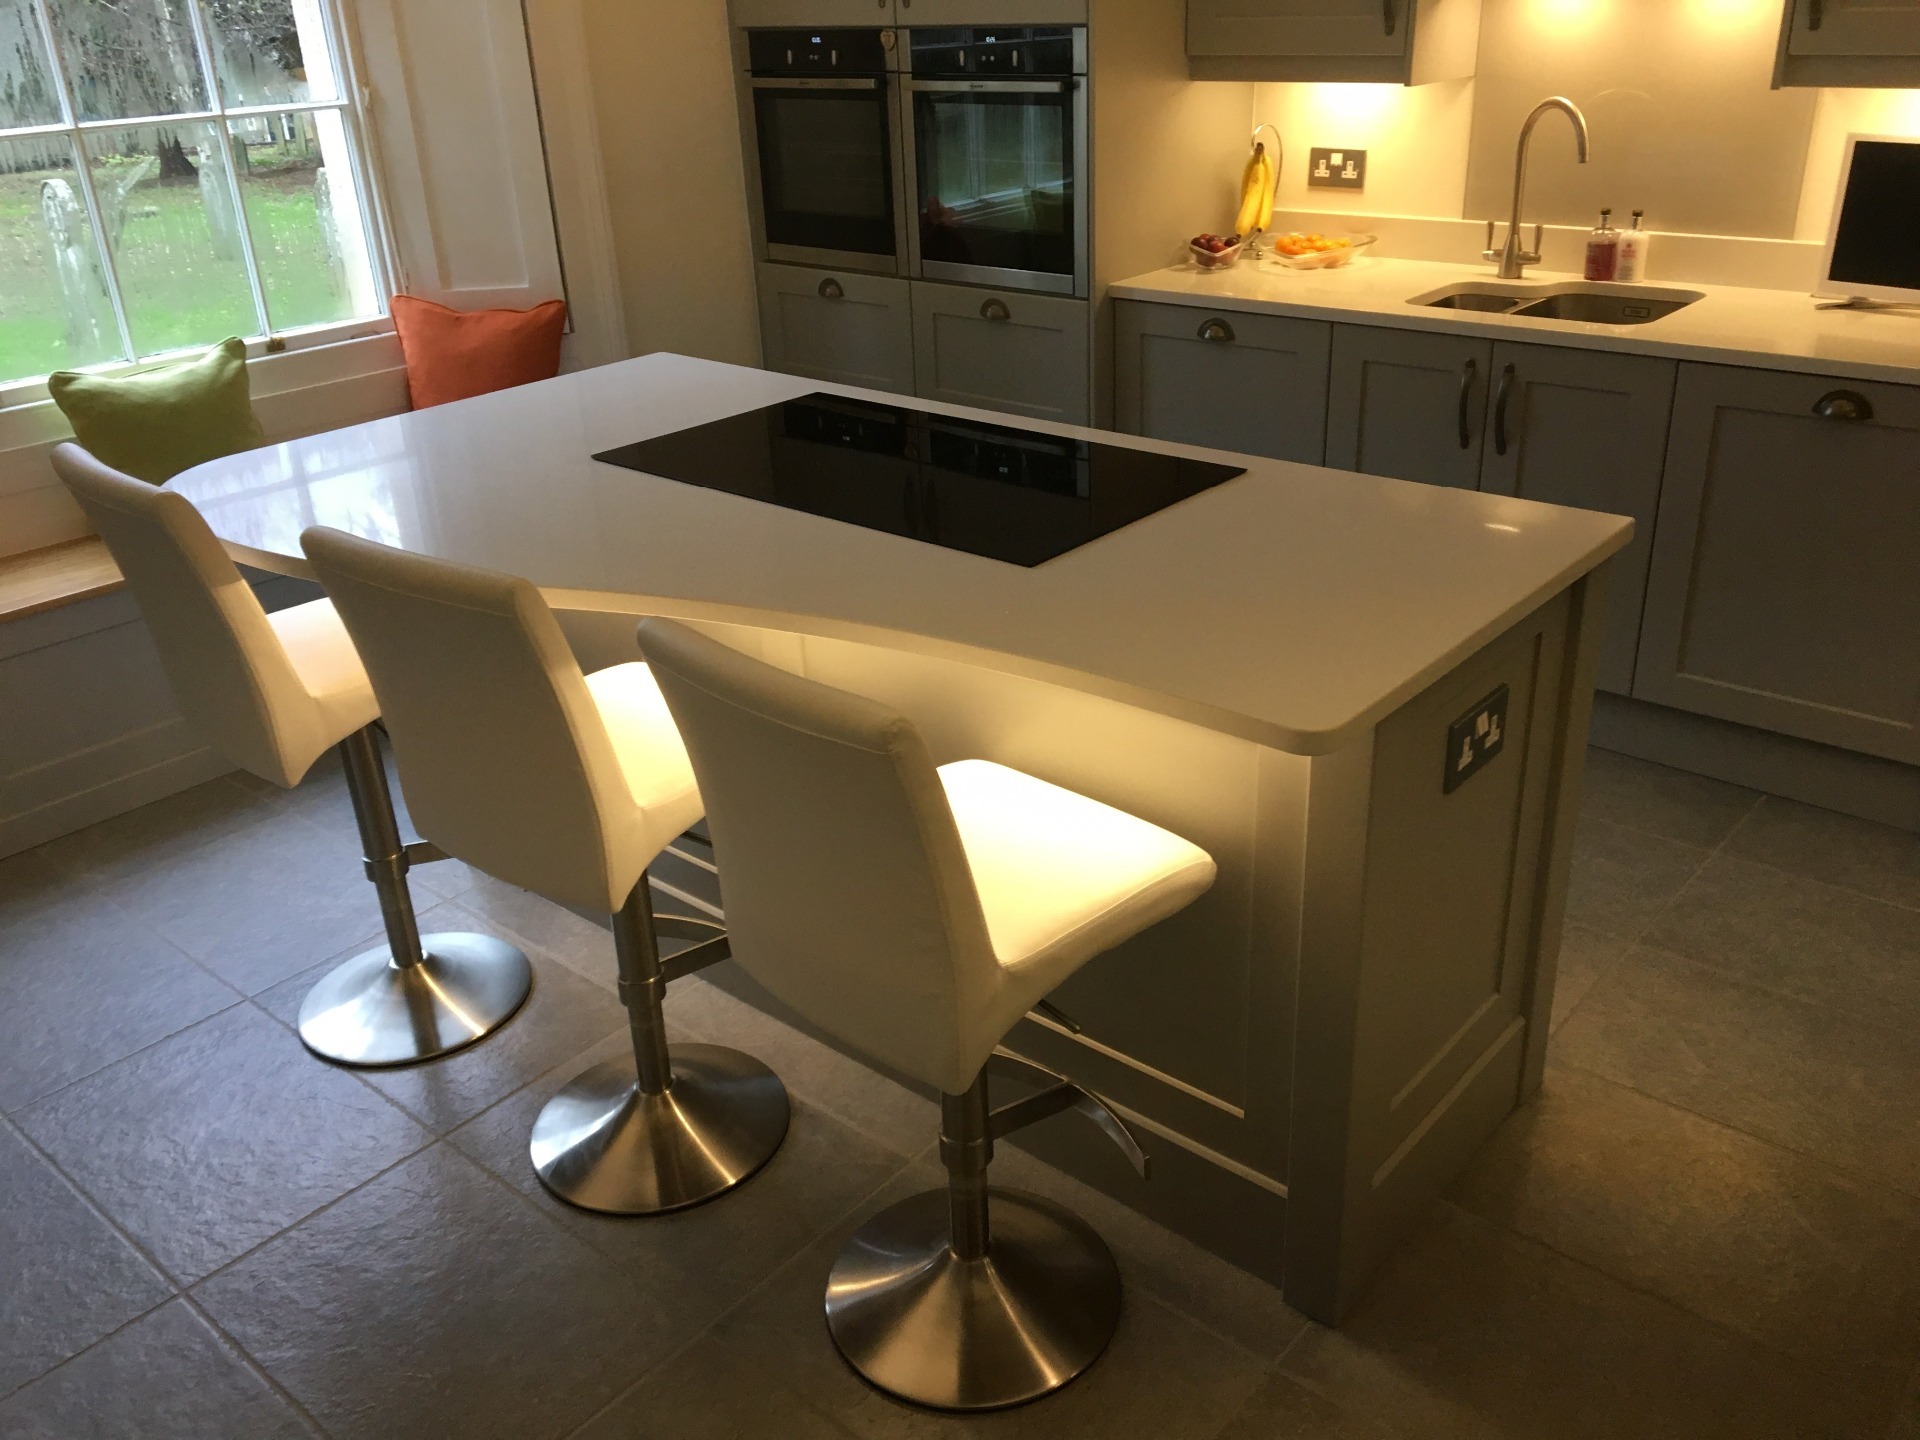 Bespoke kitchen by Furniture & Design of Oxford